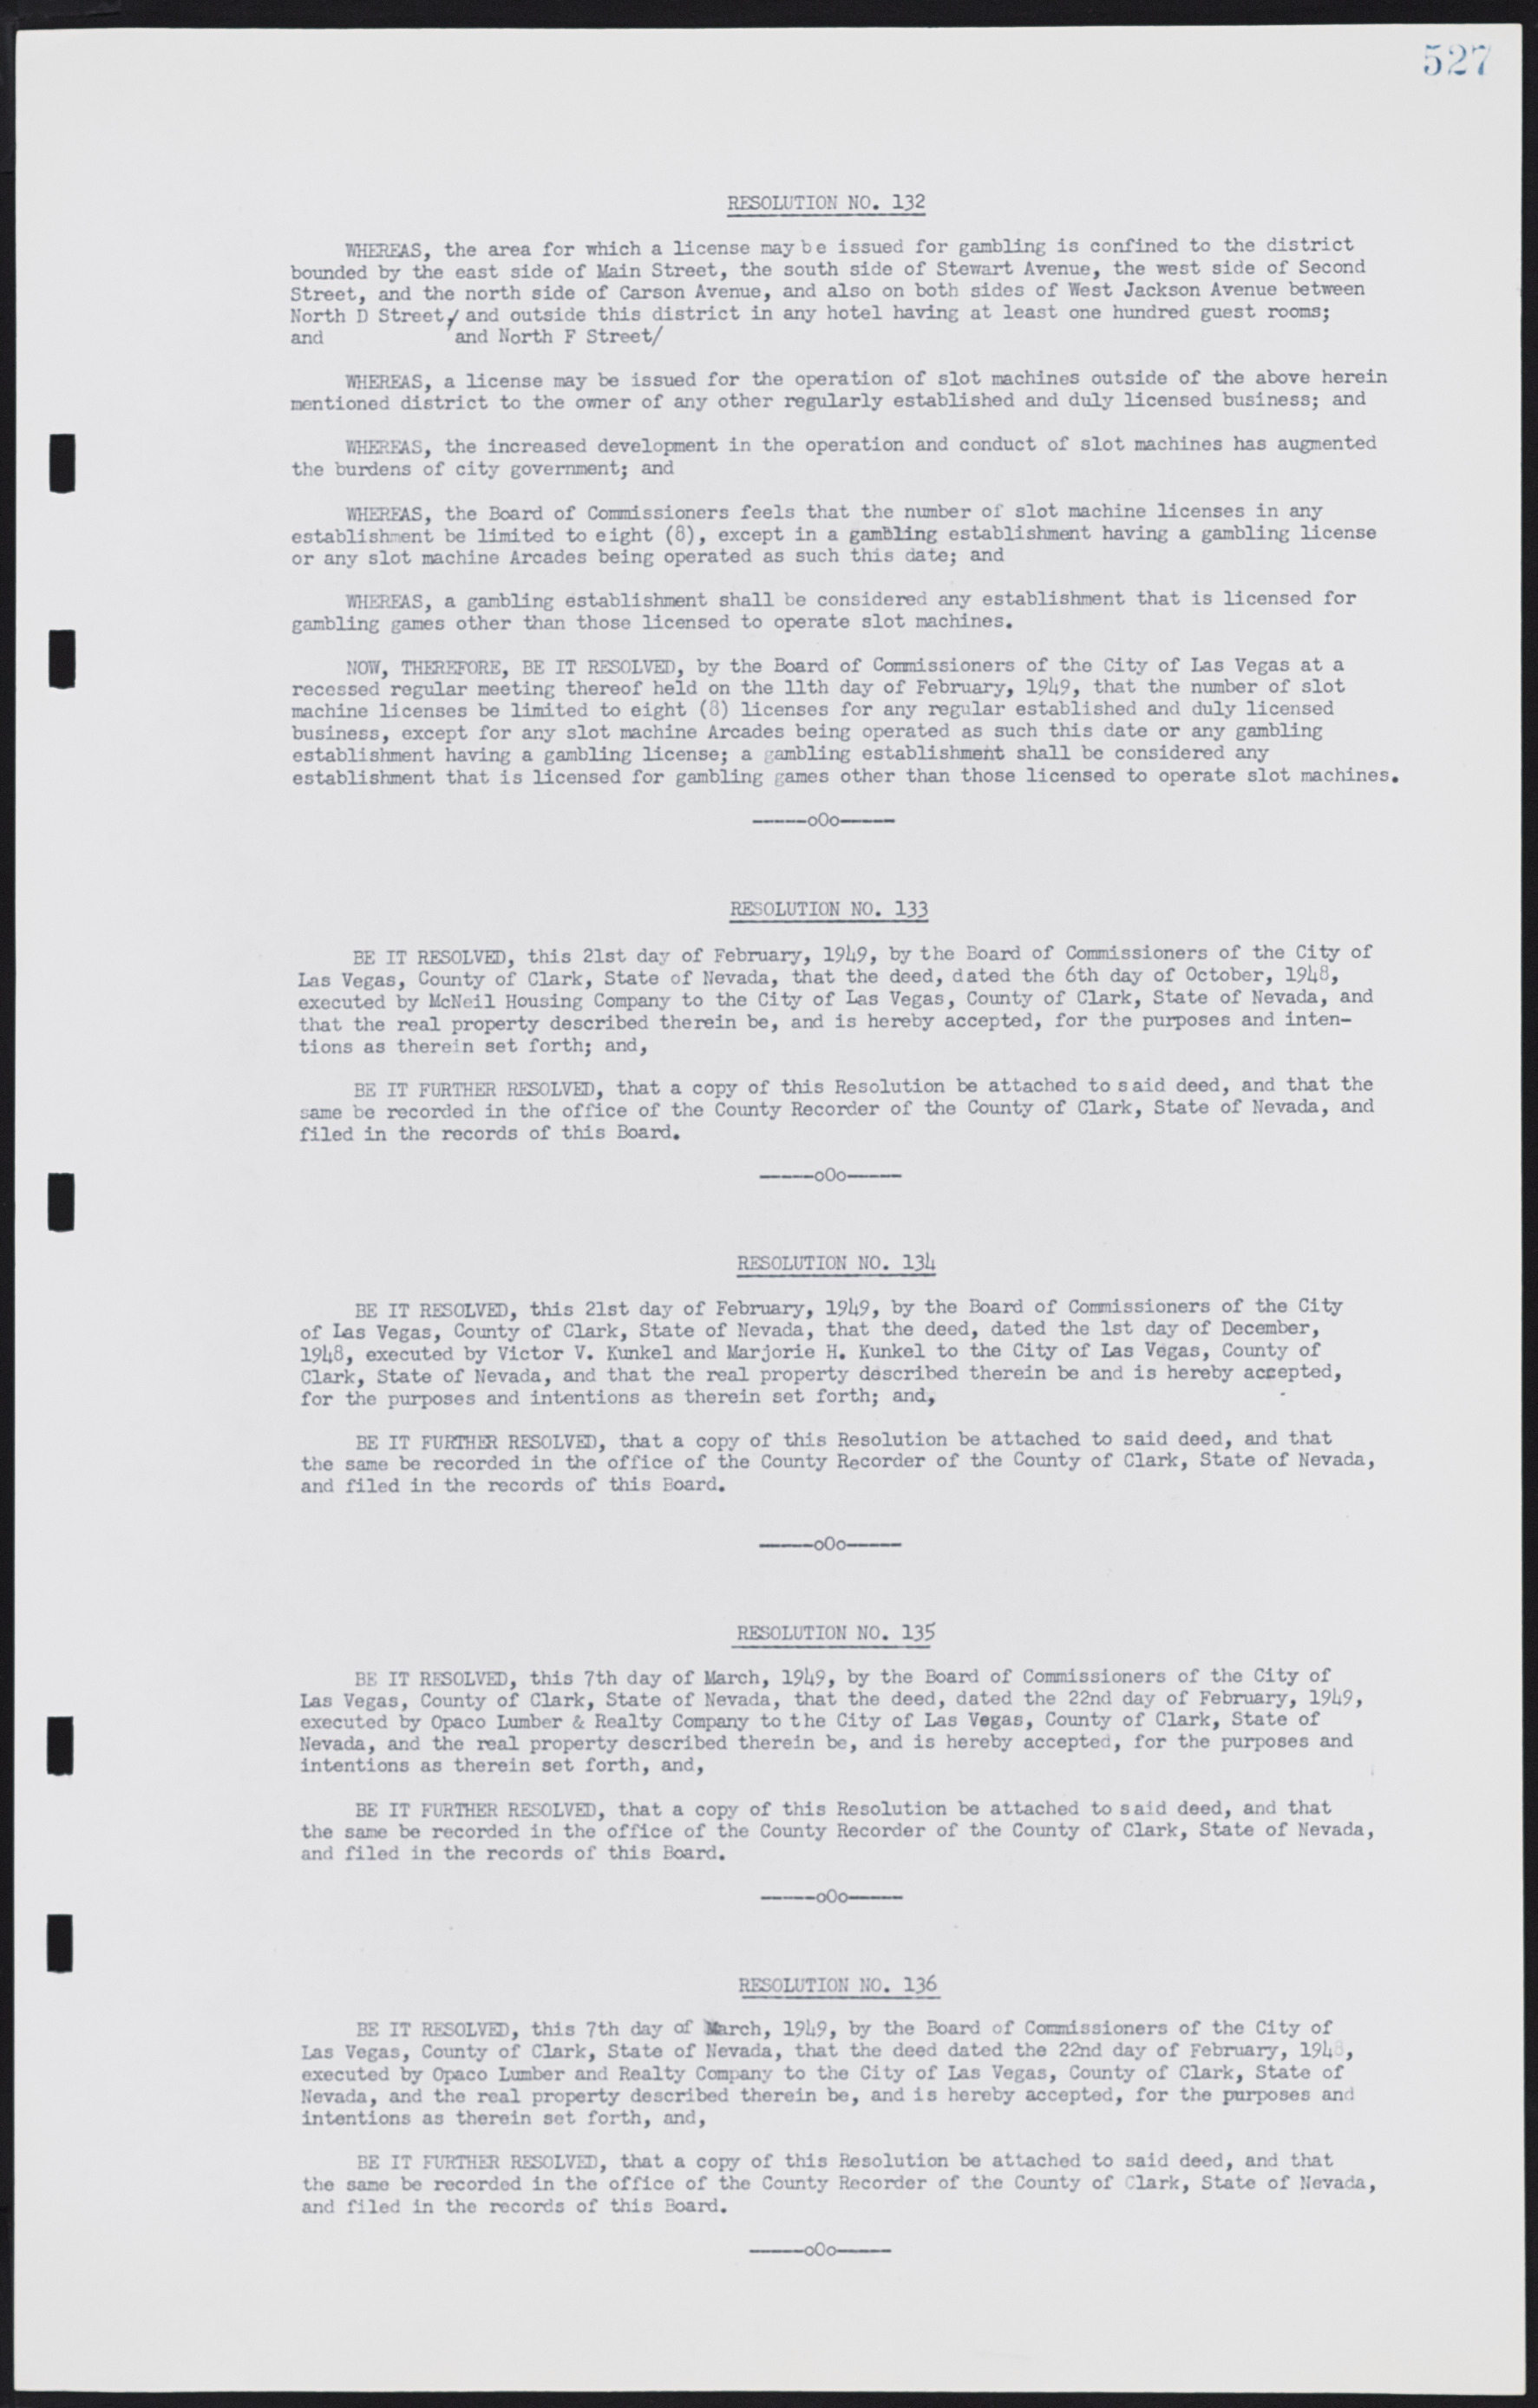 Las Vegas City Commission Minutes, January 7, 1947 to October 26, 1949, lvc000006-557